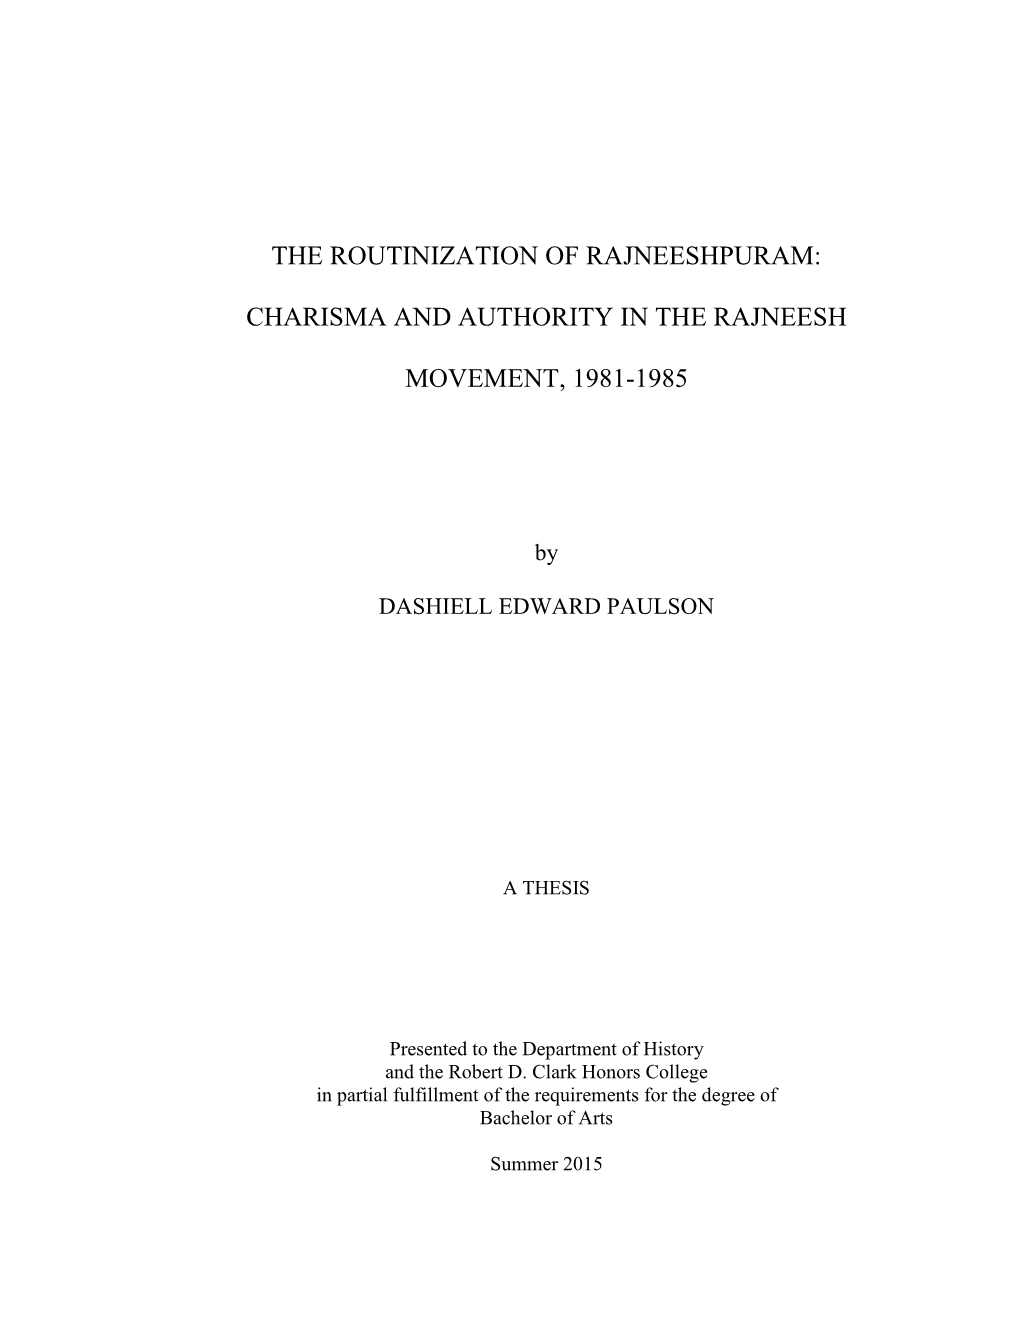 The Routinization of Rajneeshpuram: Charisma and Authority in the Rajneesh Movement, 1981-1985